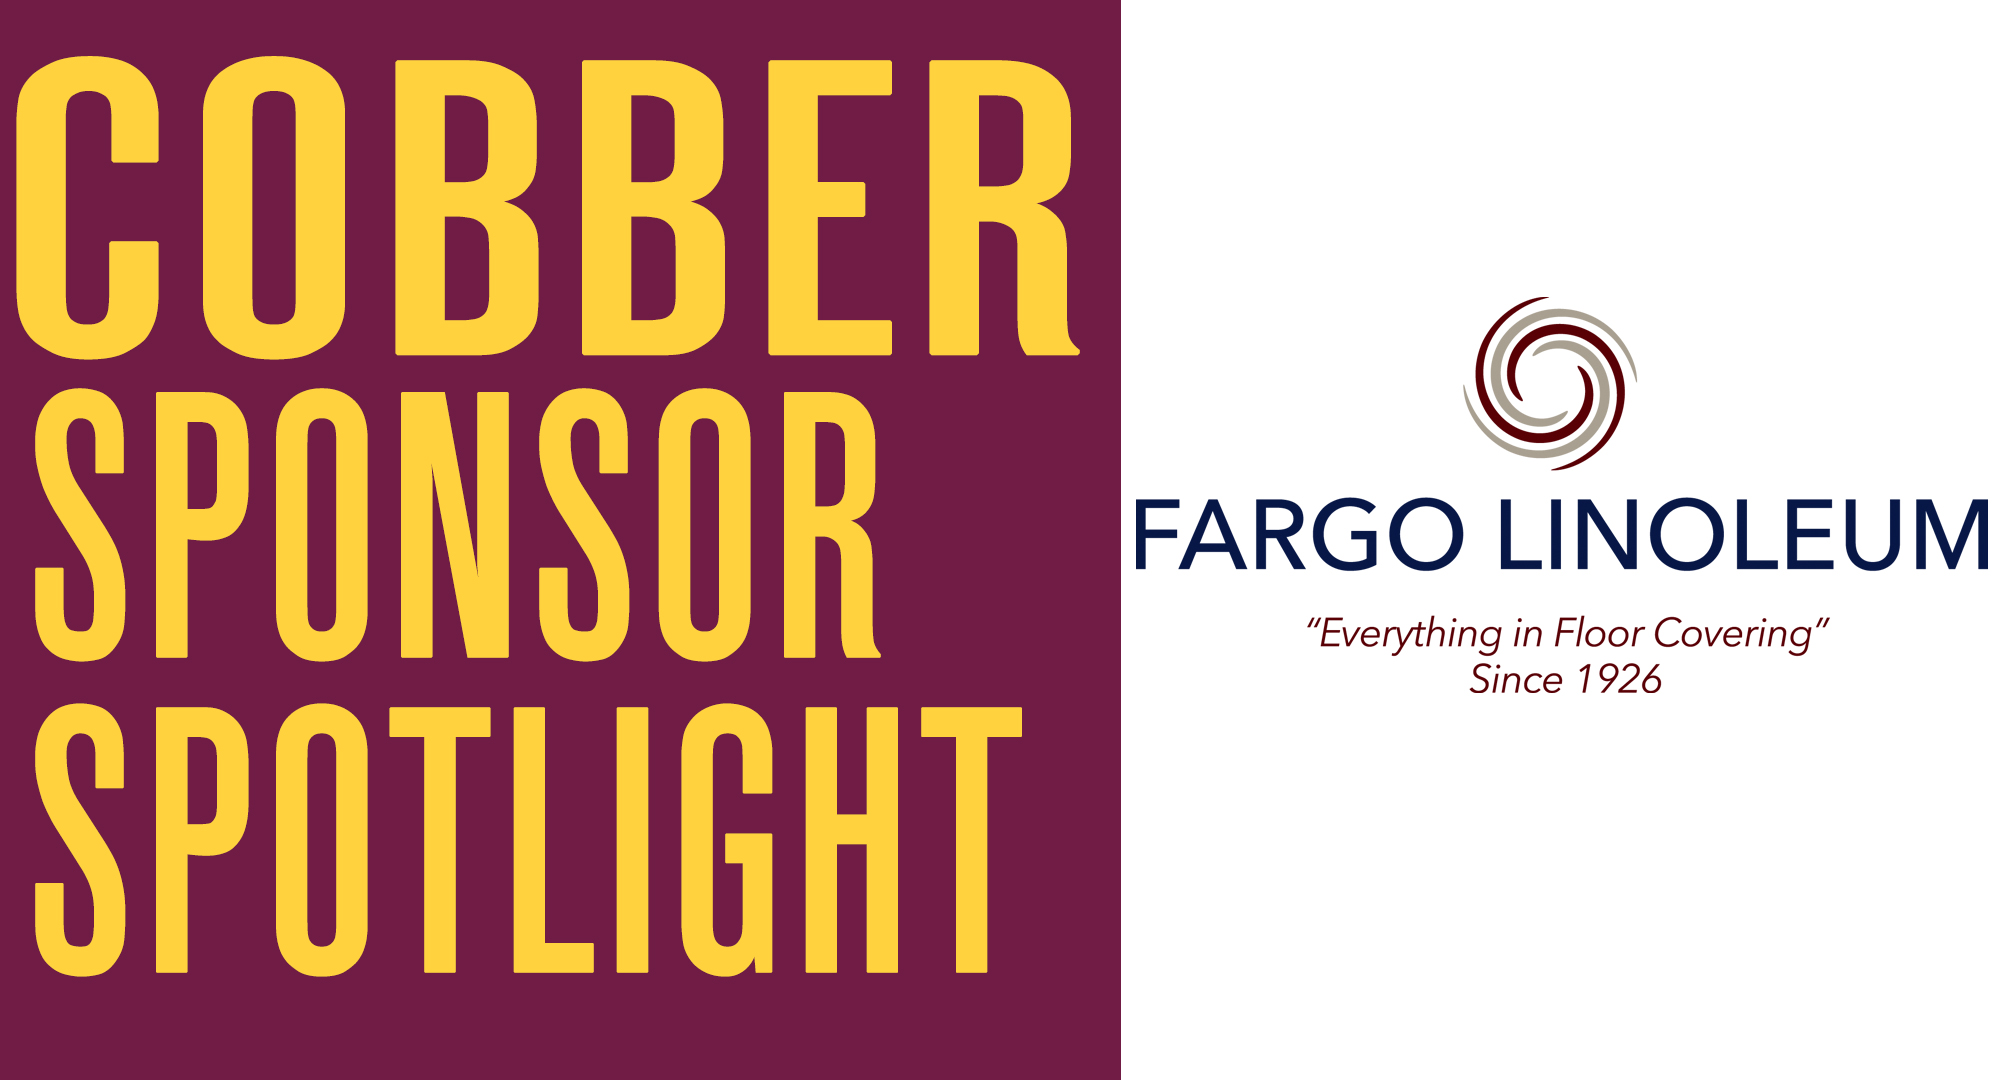 Cobber Sponsor Spotlight - Fargo Linoleum